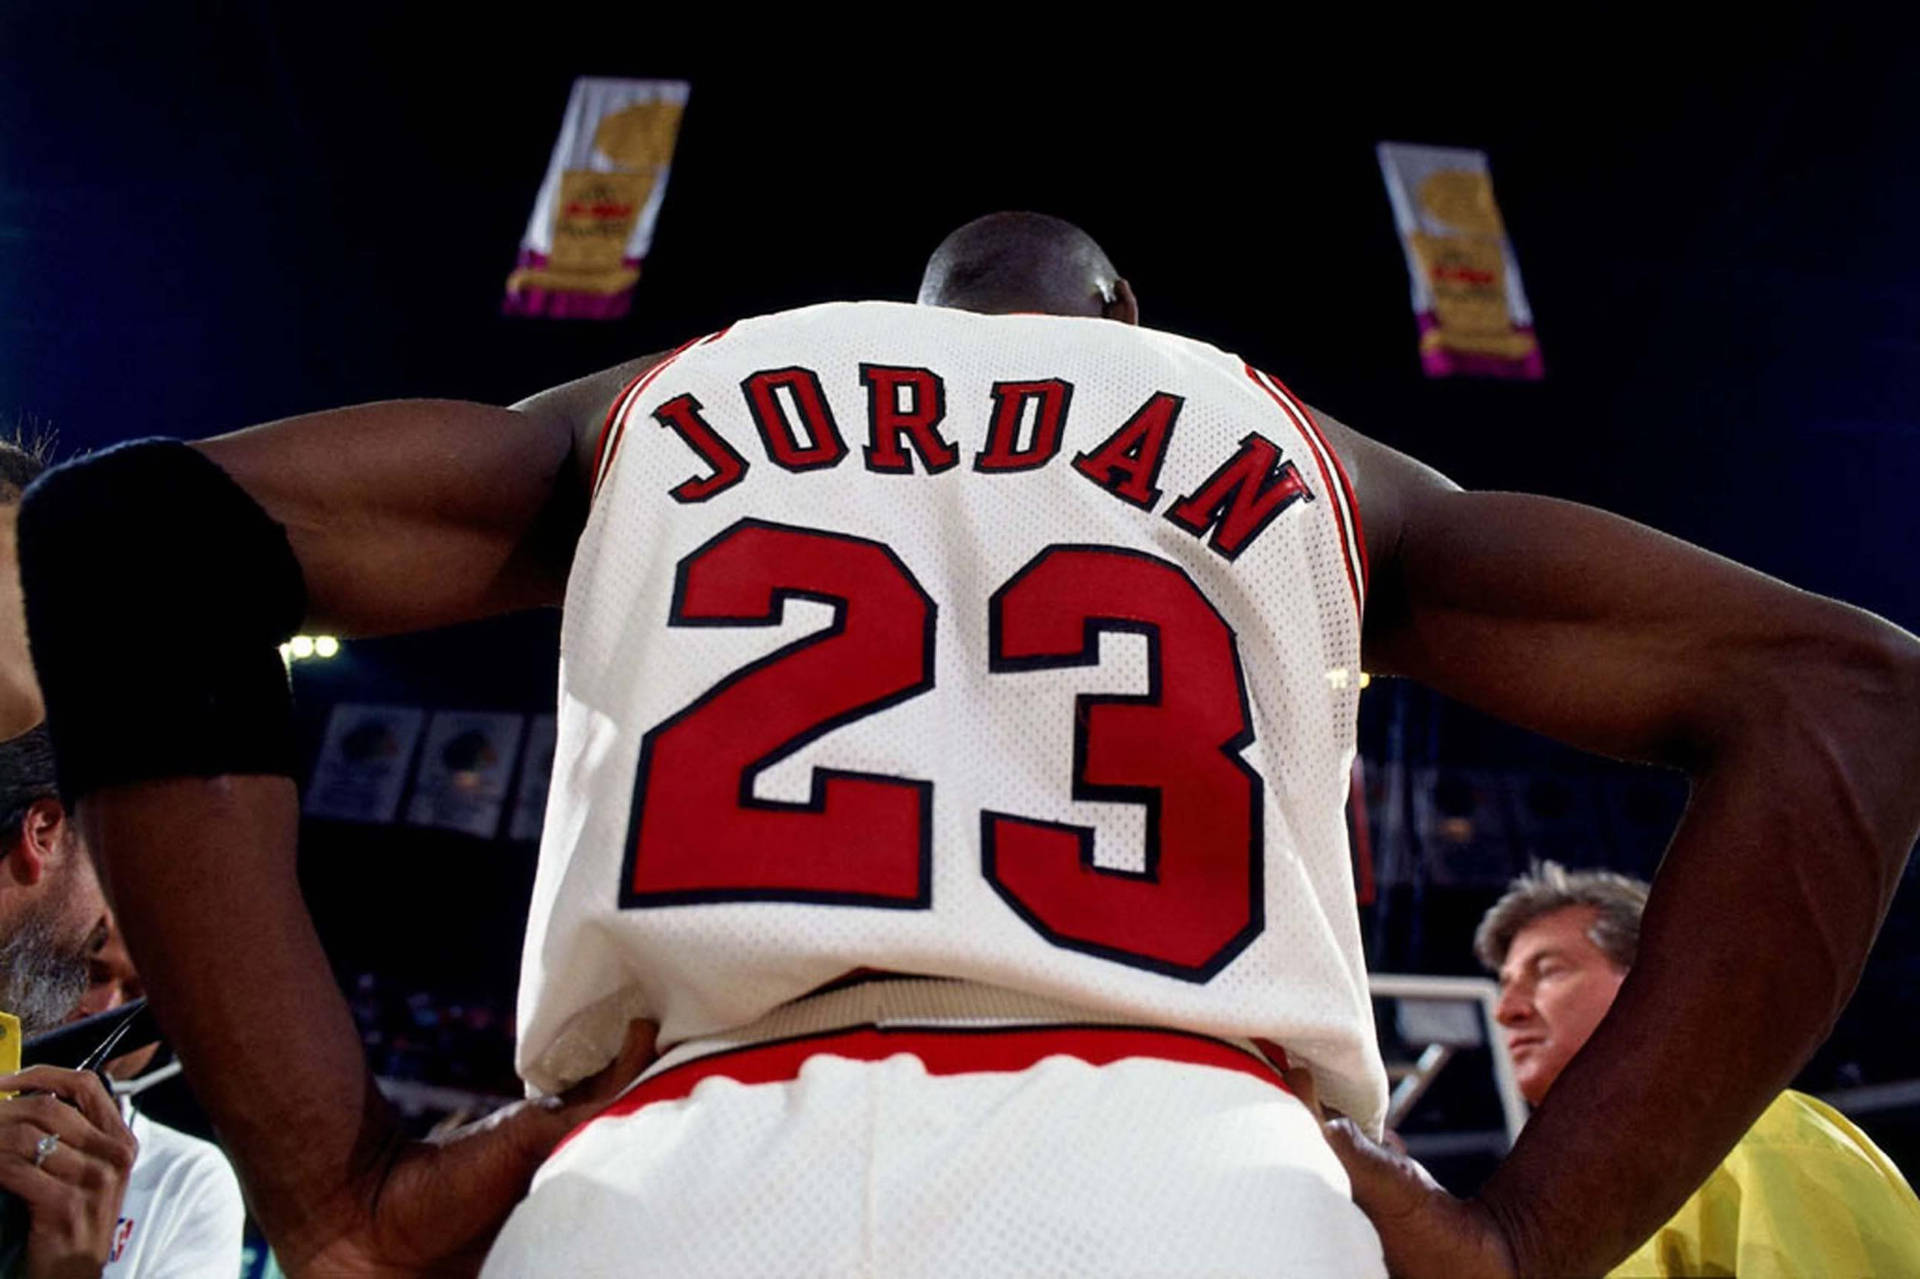 2591X1726 Michael Jordan Wallpaper and Background